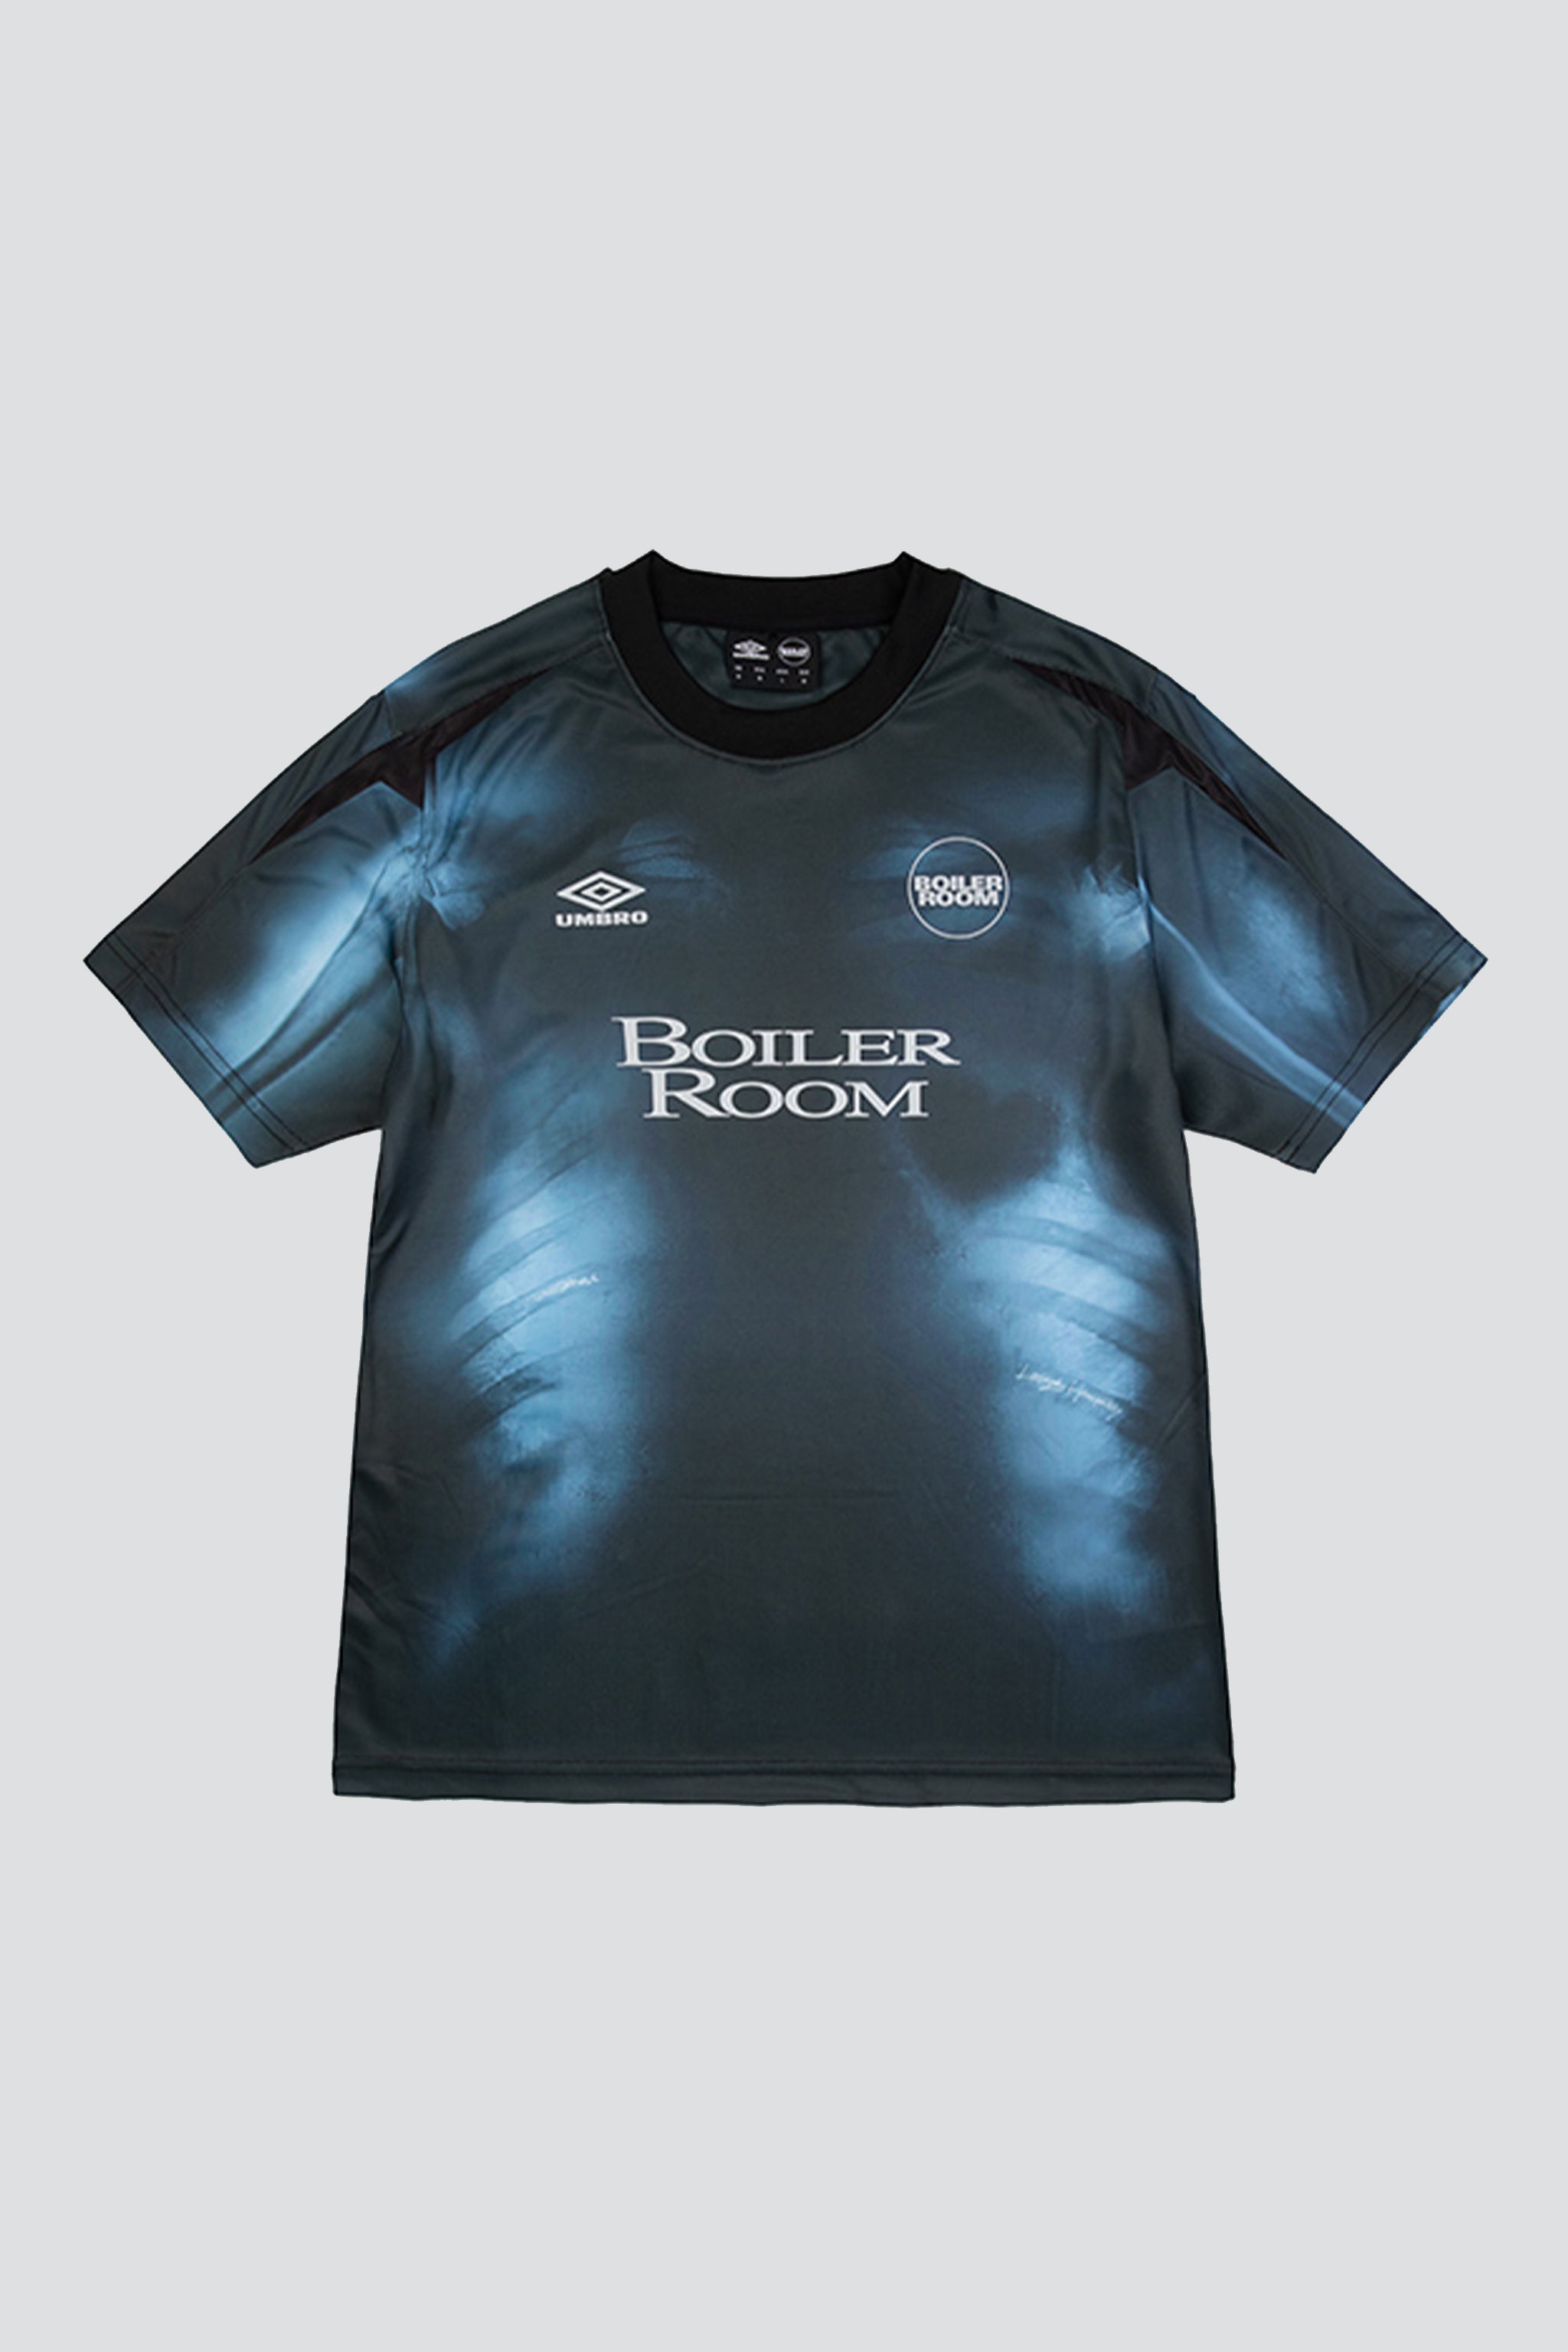 boiler room umbro サッカーシャツ ゲームシャツ ボイラールーム試着程度の美品です